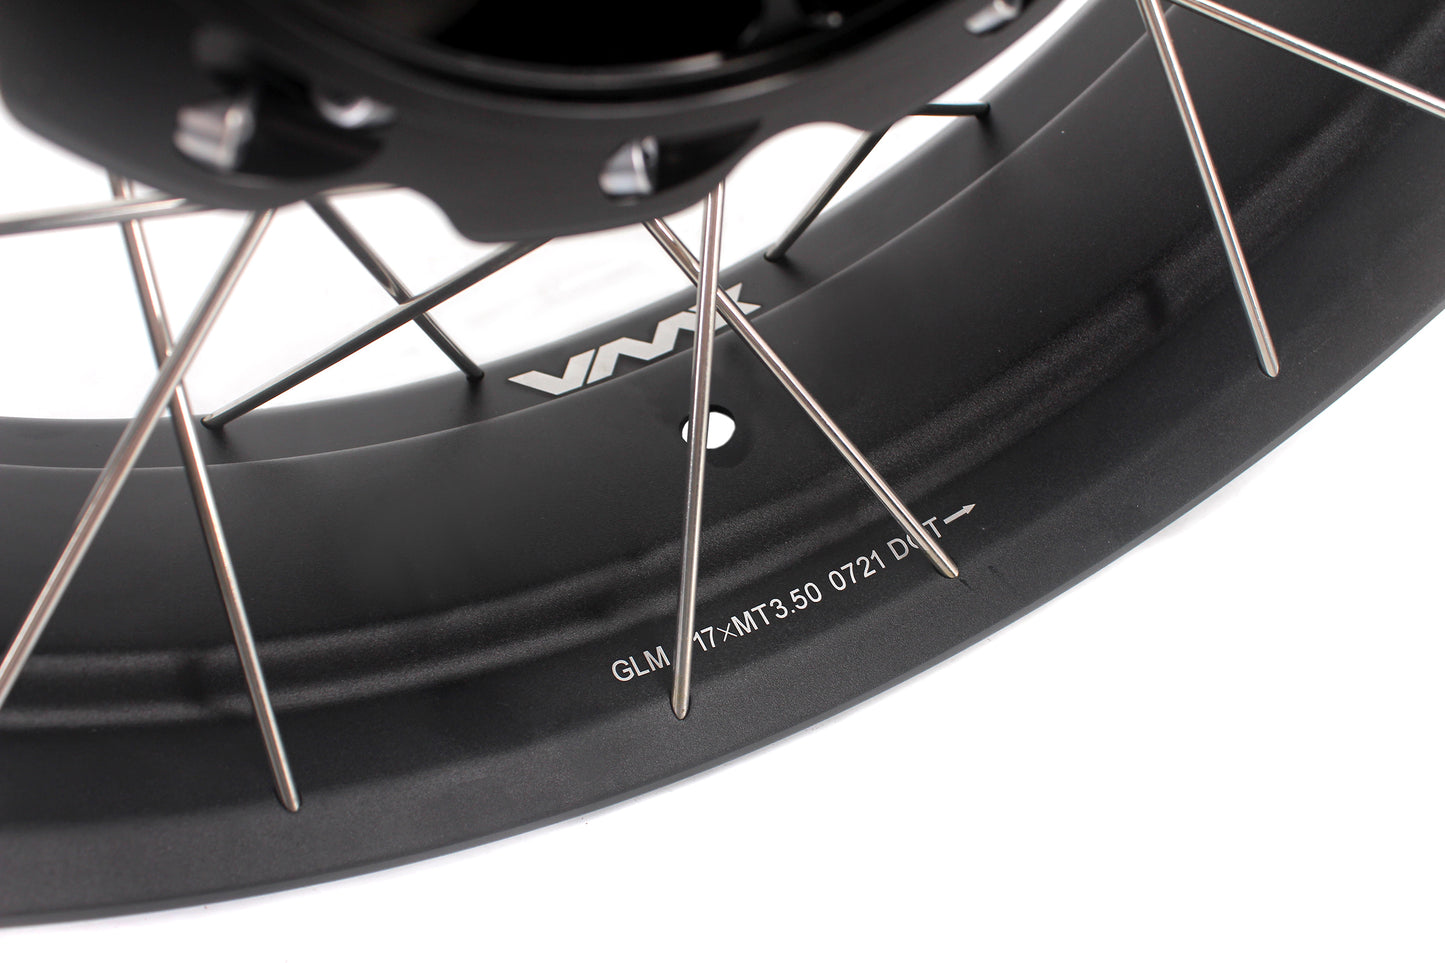 VMX-Racing 19-17in. Spoke Tubeless Wheels Fit For KTM390 Adventure Orange/White Fit For Husqvarna 401 2020 2020